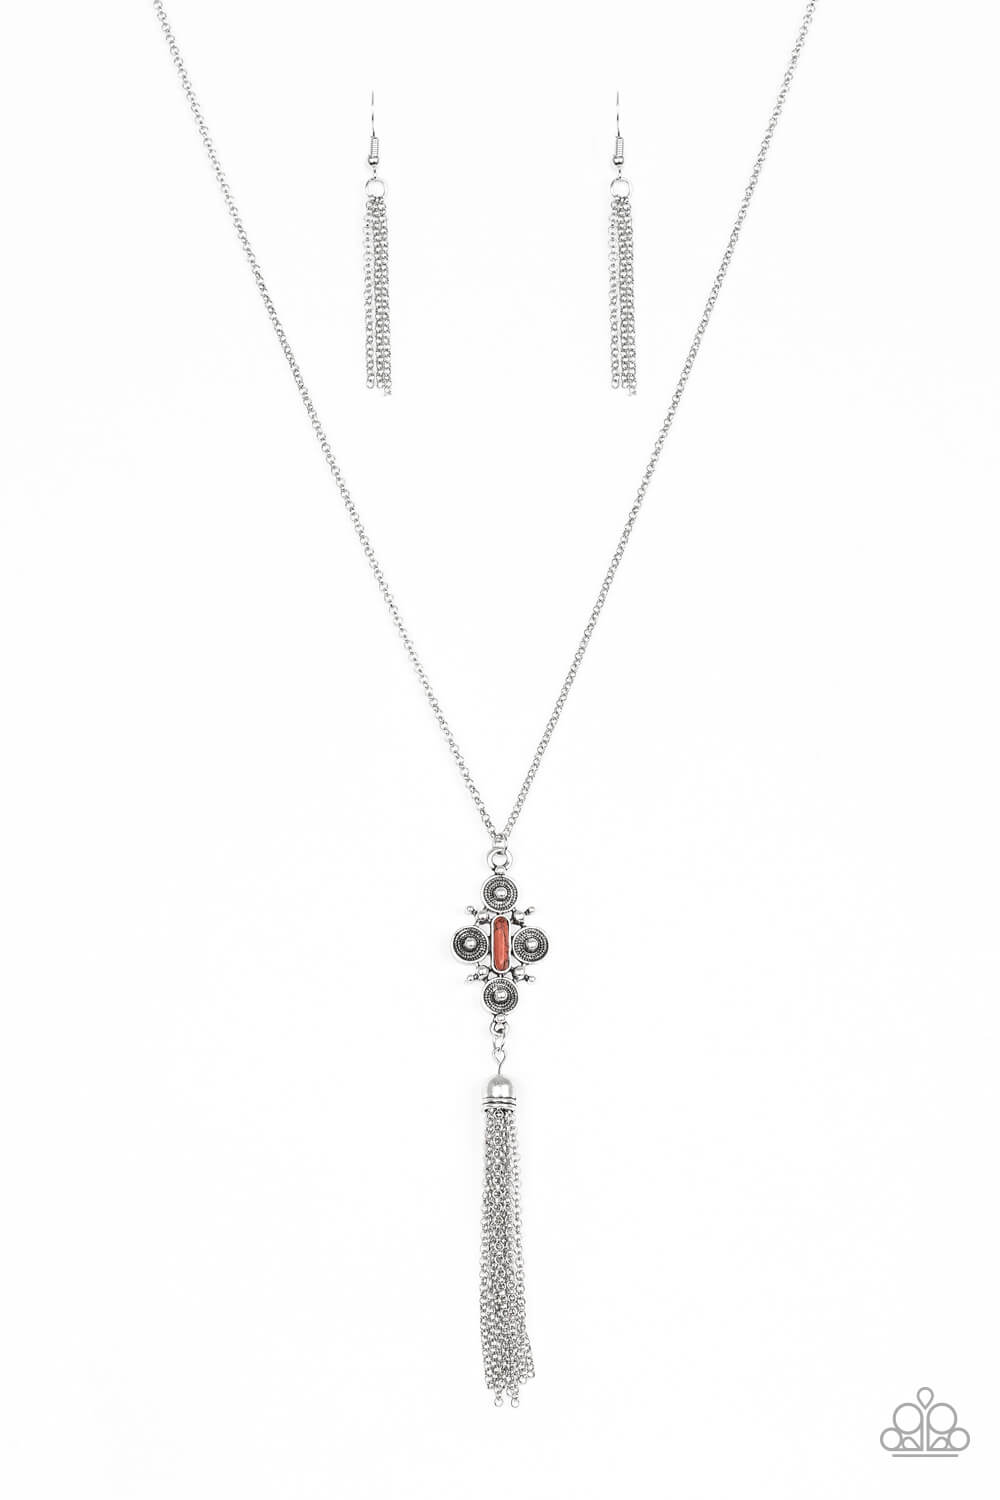 Sedona Skies Brown Stone Necklace Set - Princess Glam Shop